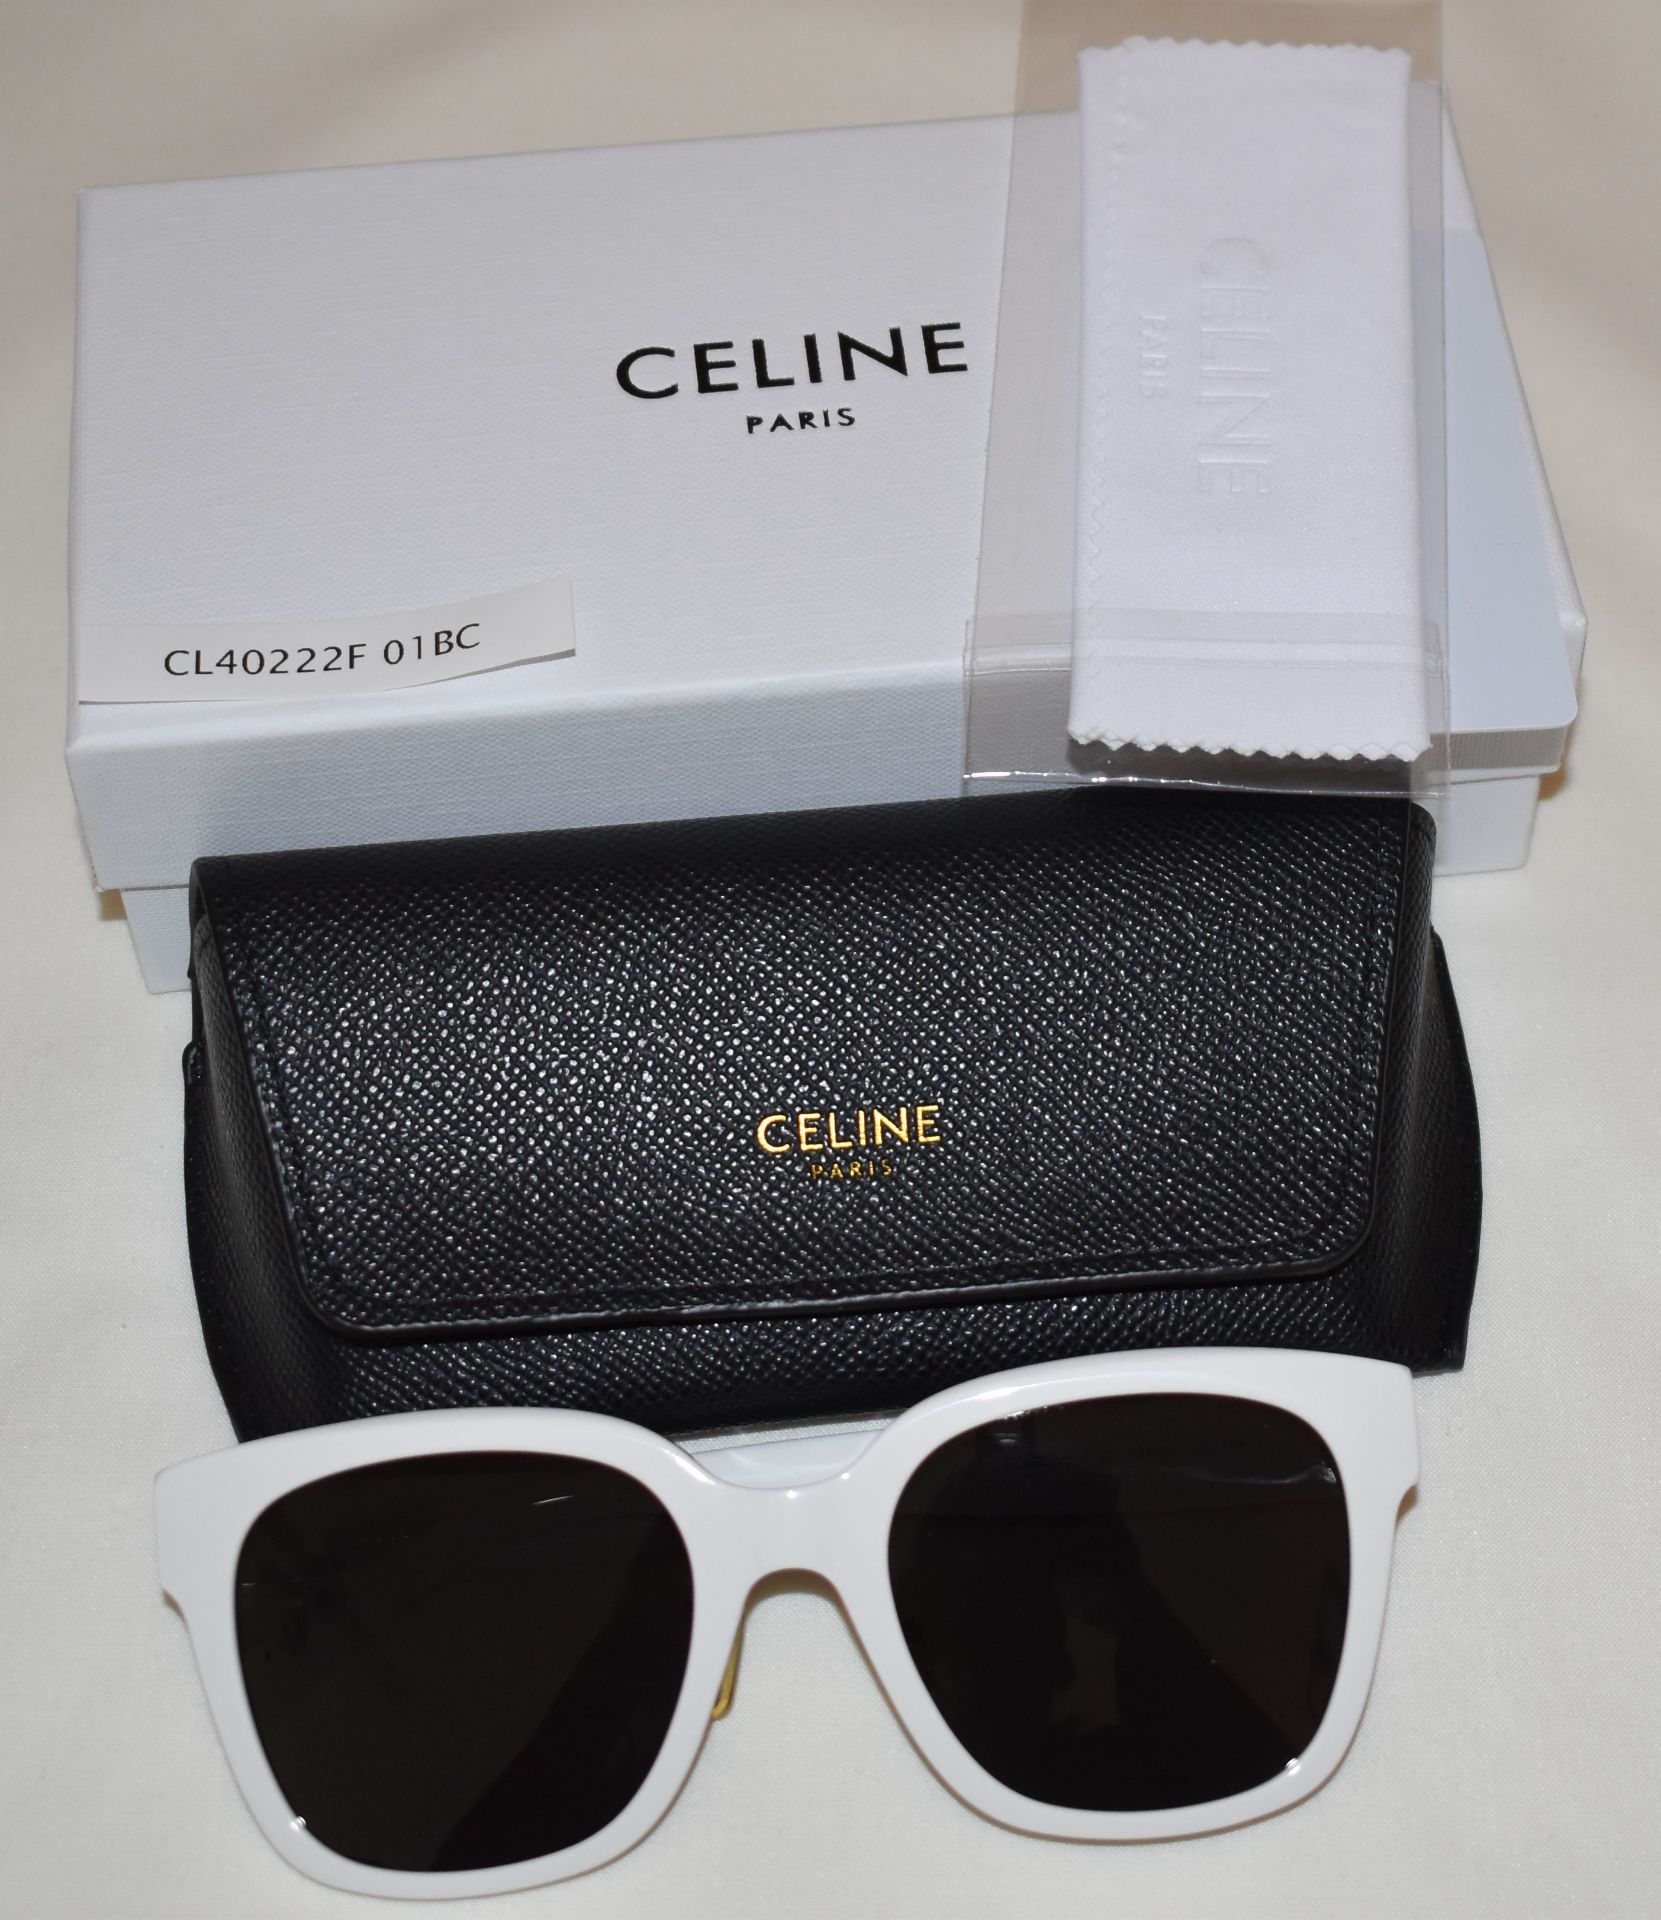 Celine CL40222F 01BC Sunglasses - Image 4 of 4